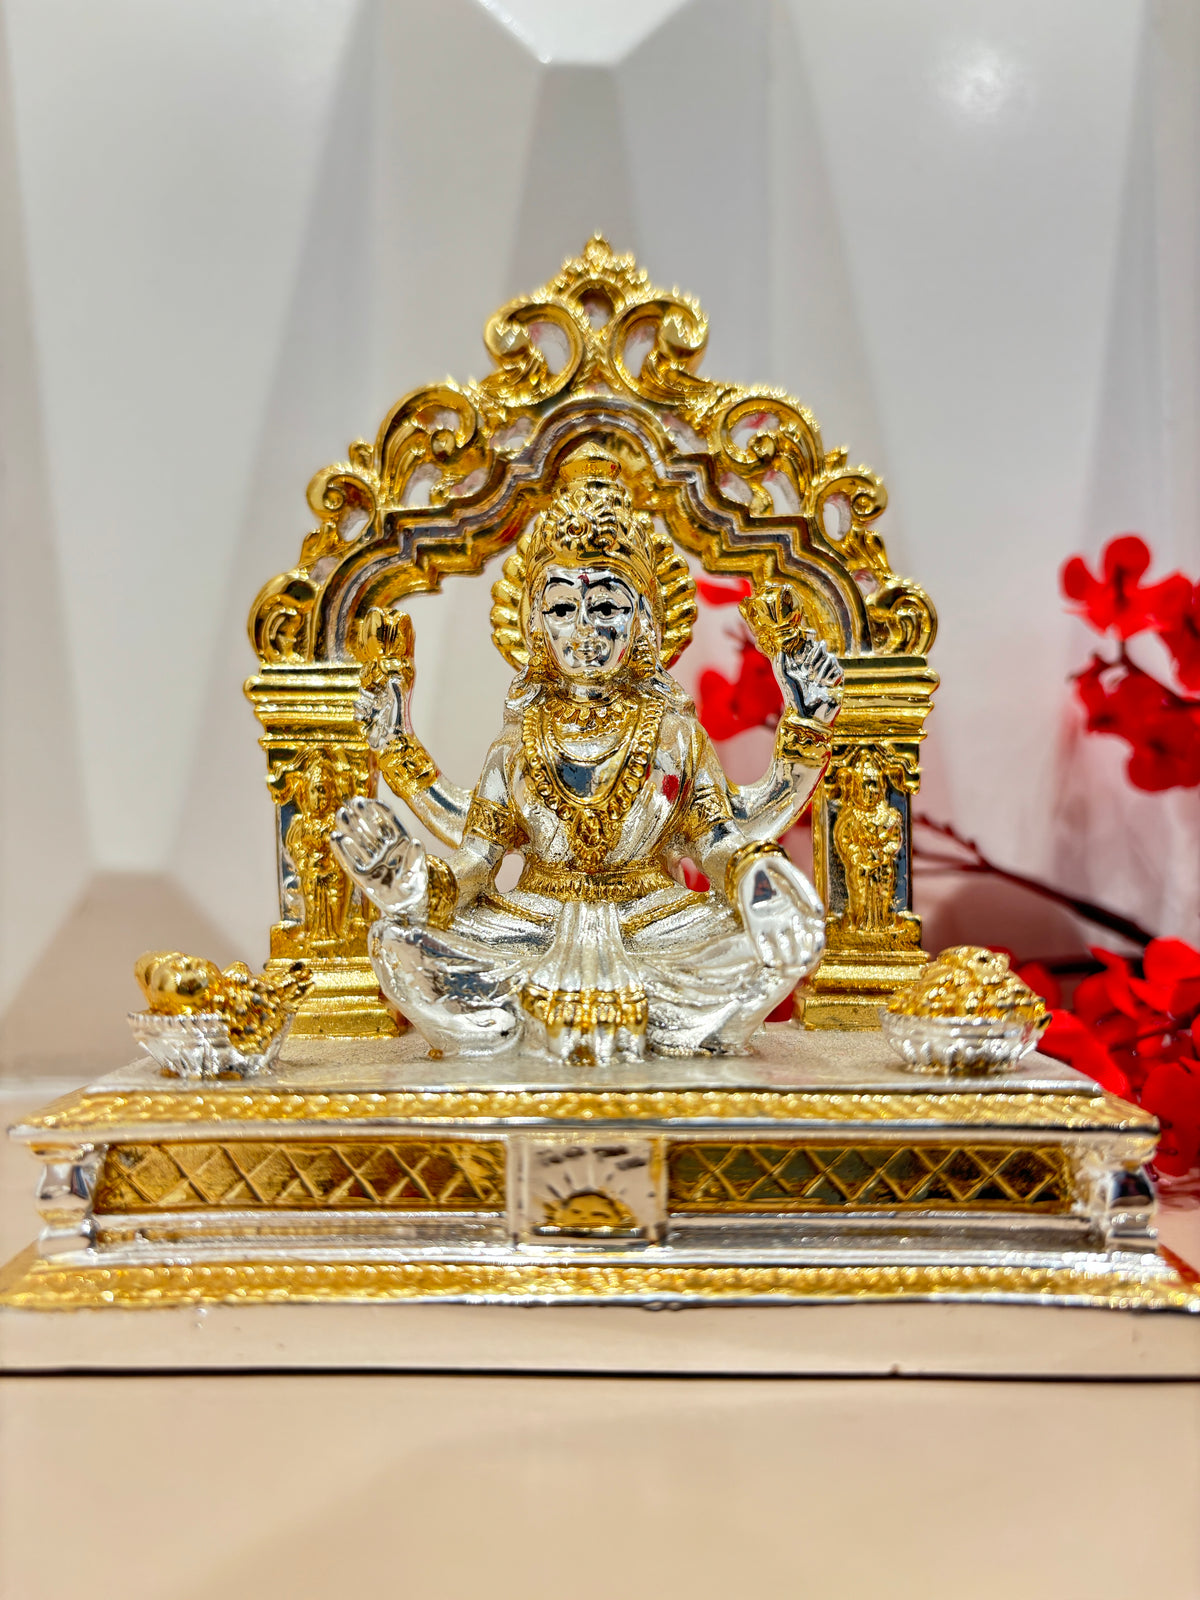 999 Original Gold and Silver Coated Lotus Laxmi Idol | Laxmi Idol Gold on Lotus | Goddess of Wealth | Diwali Dhanteras Housewarming Gift